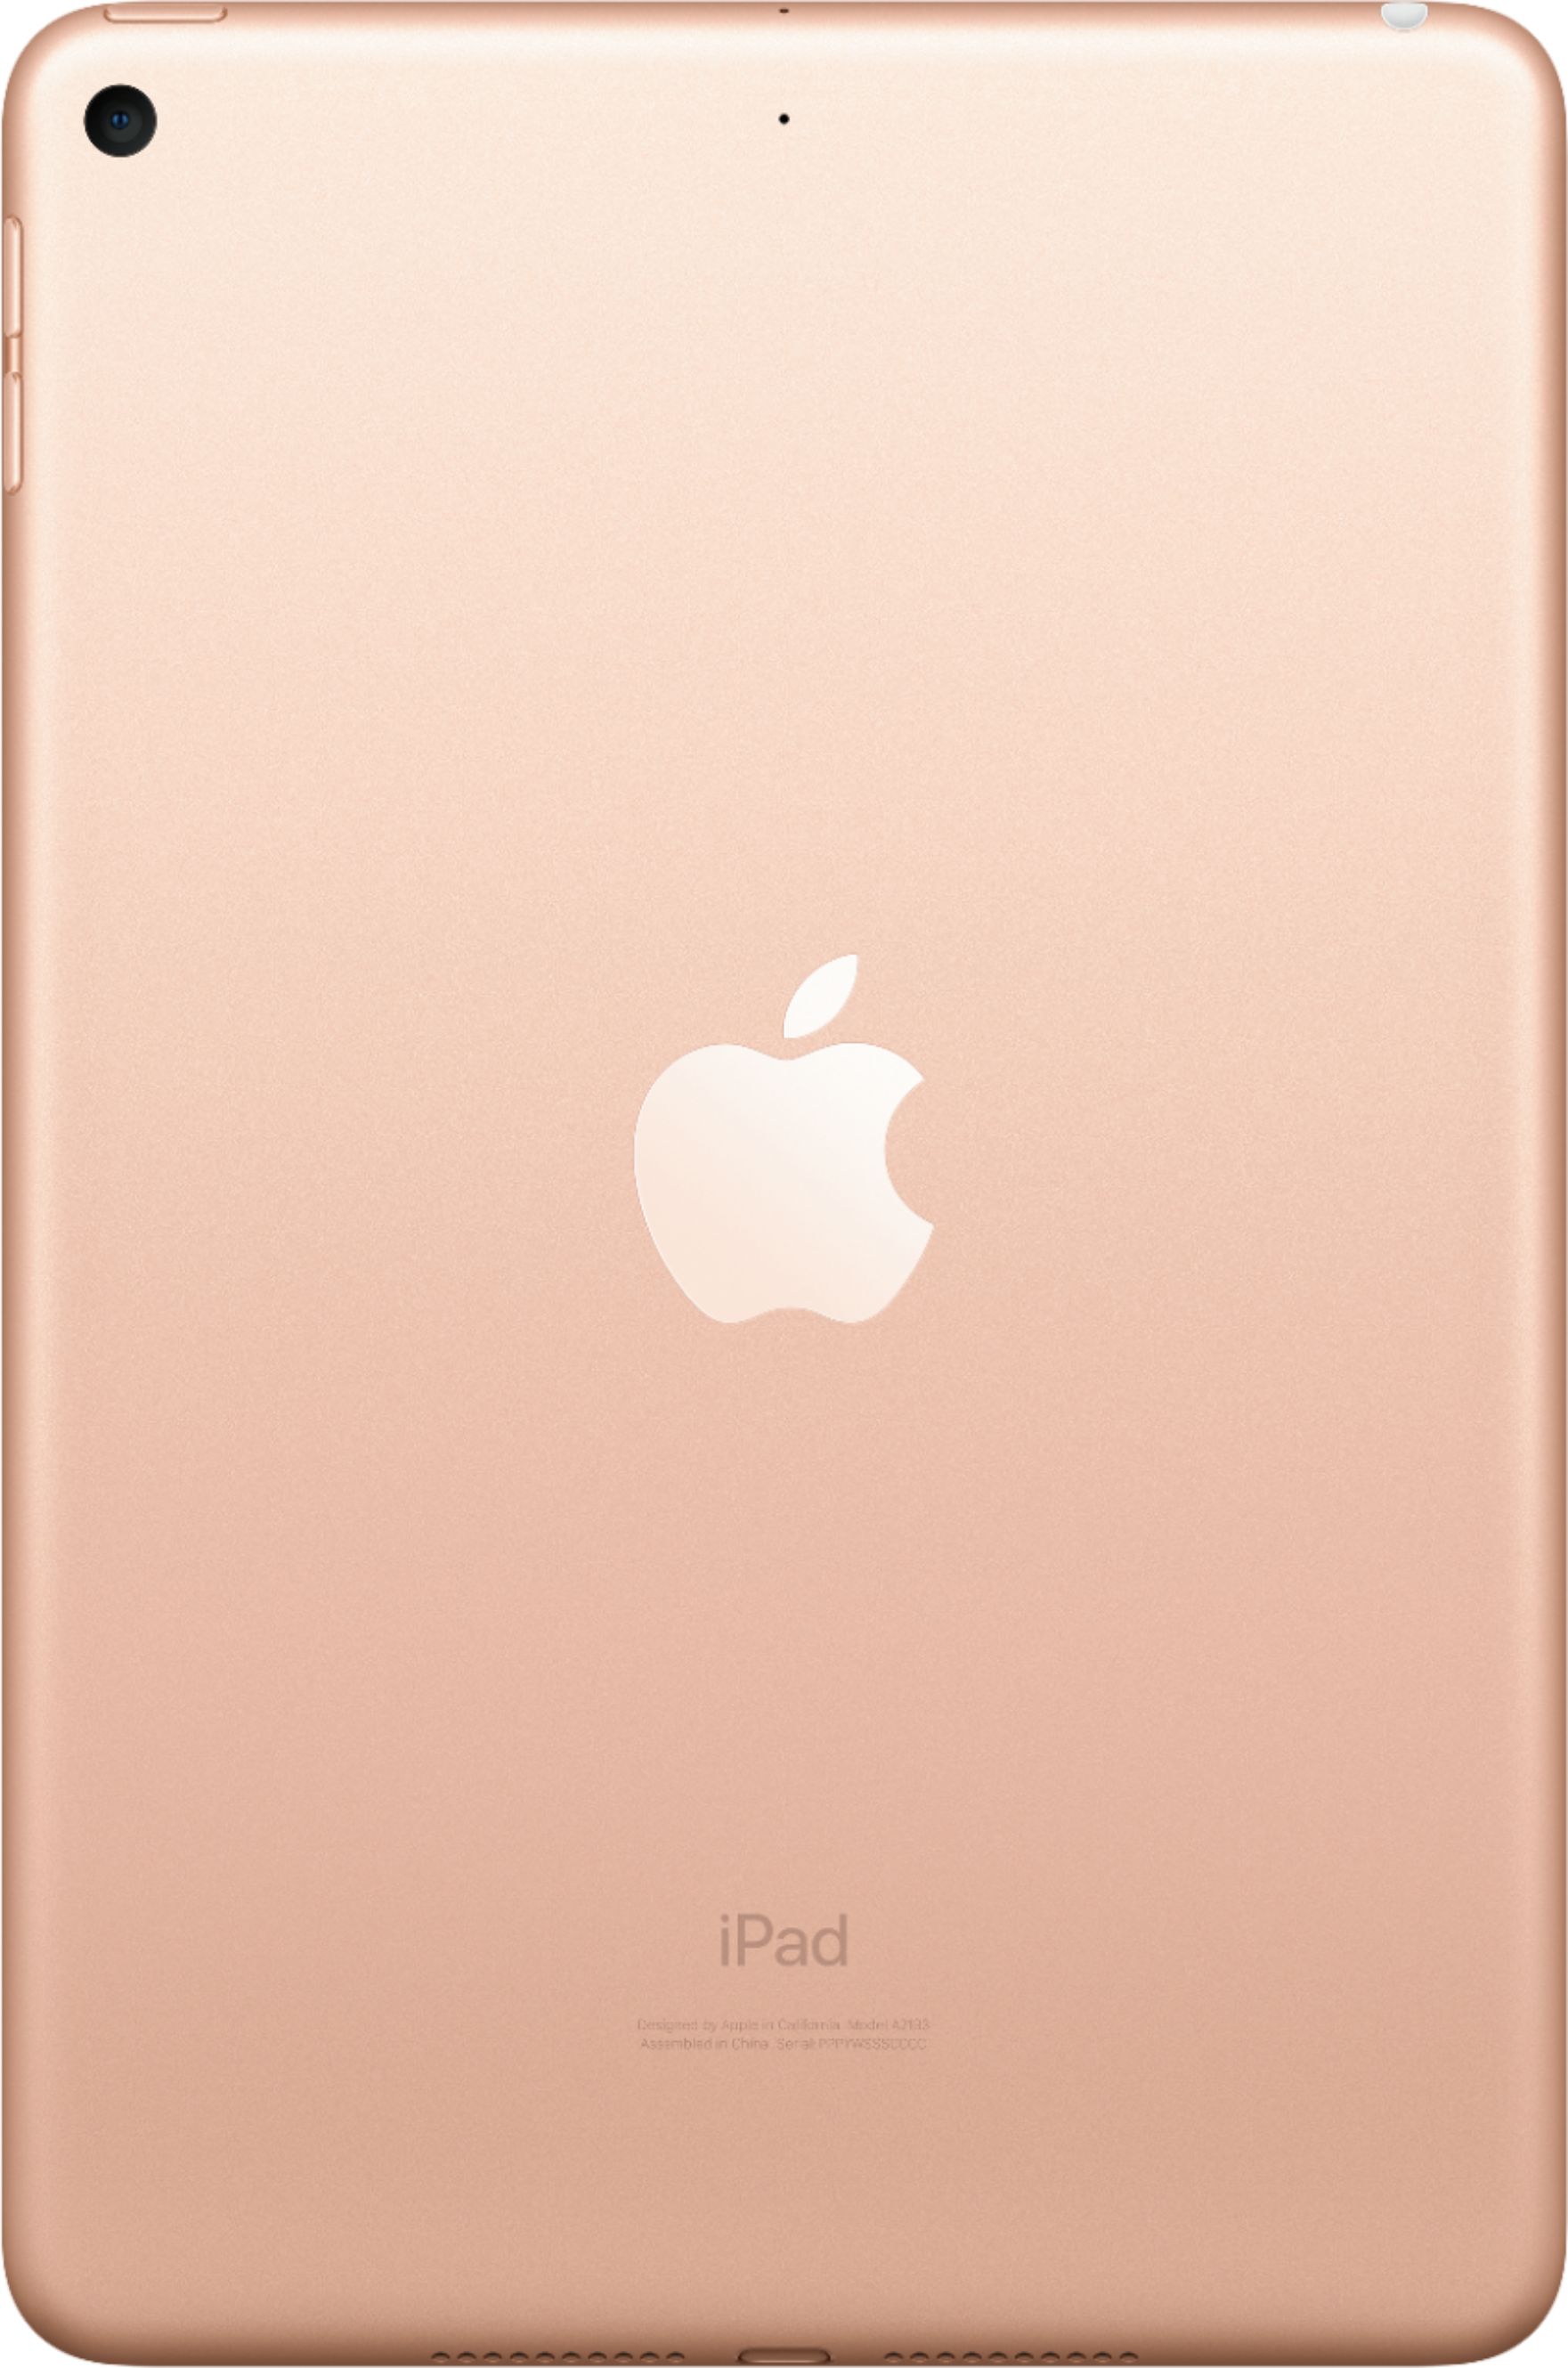 Apple Geek Squad Certified Refurbished 7.9-Inch iPad mini (5th